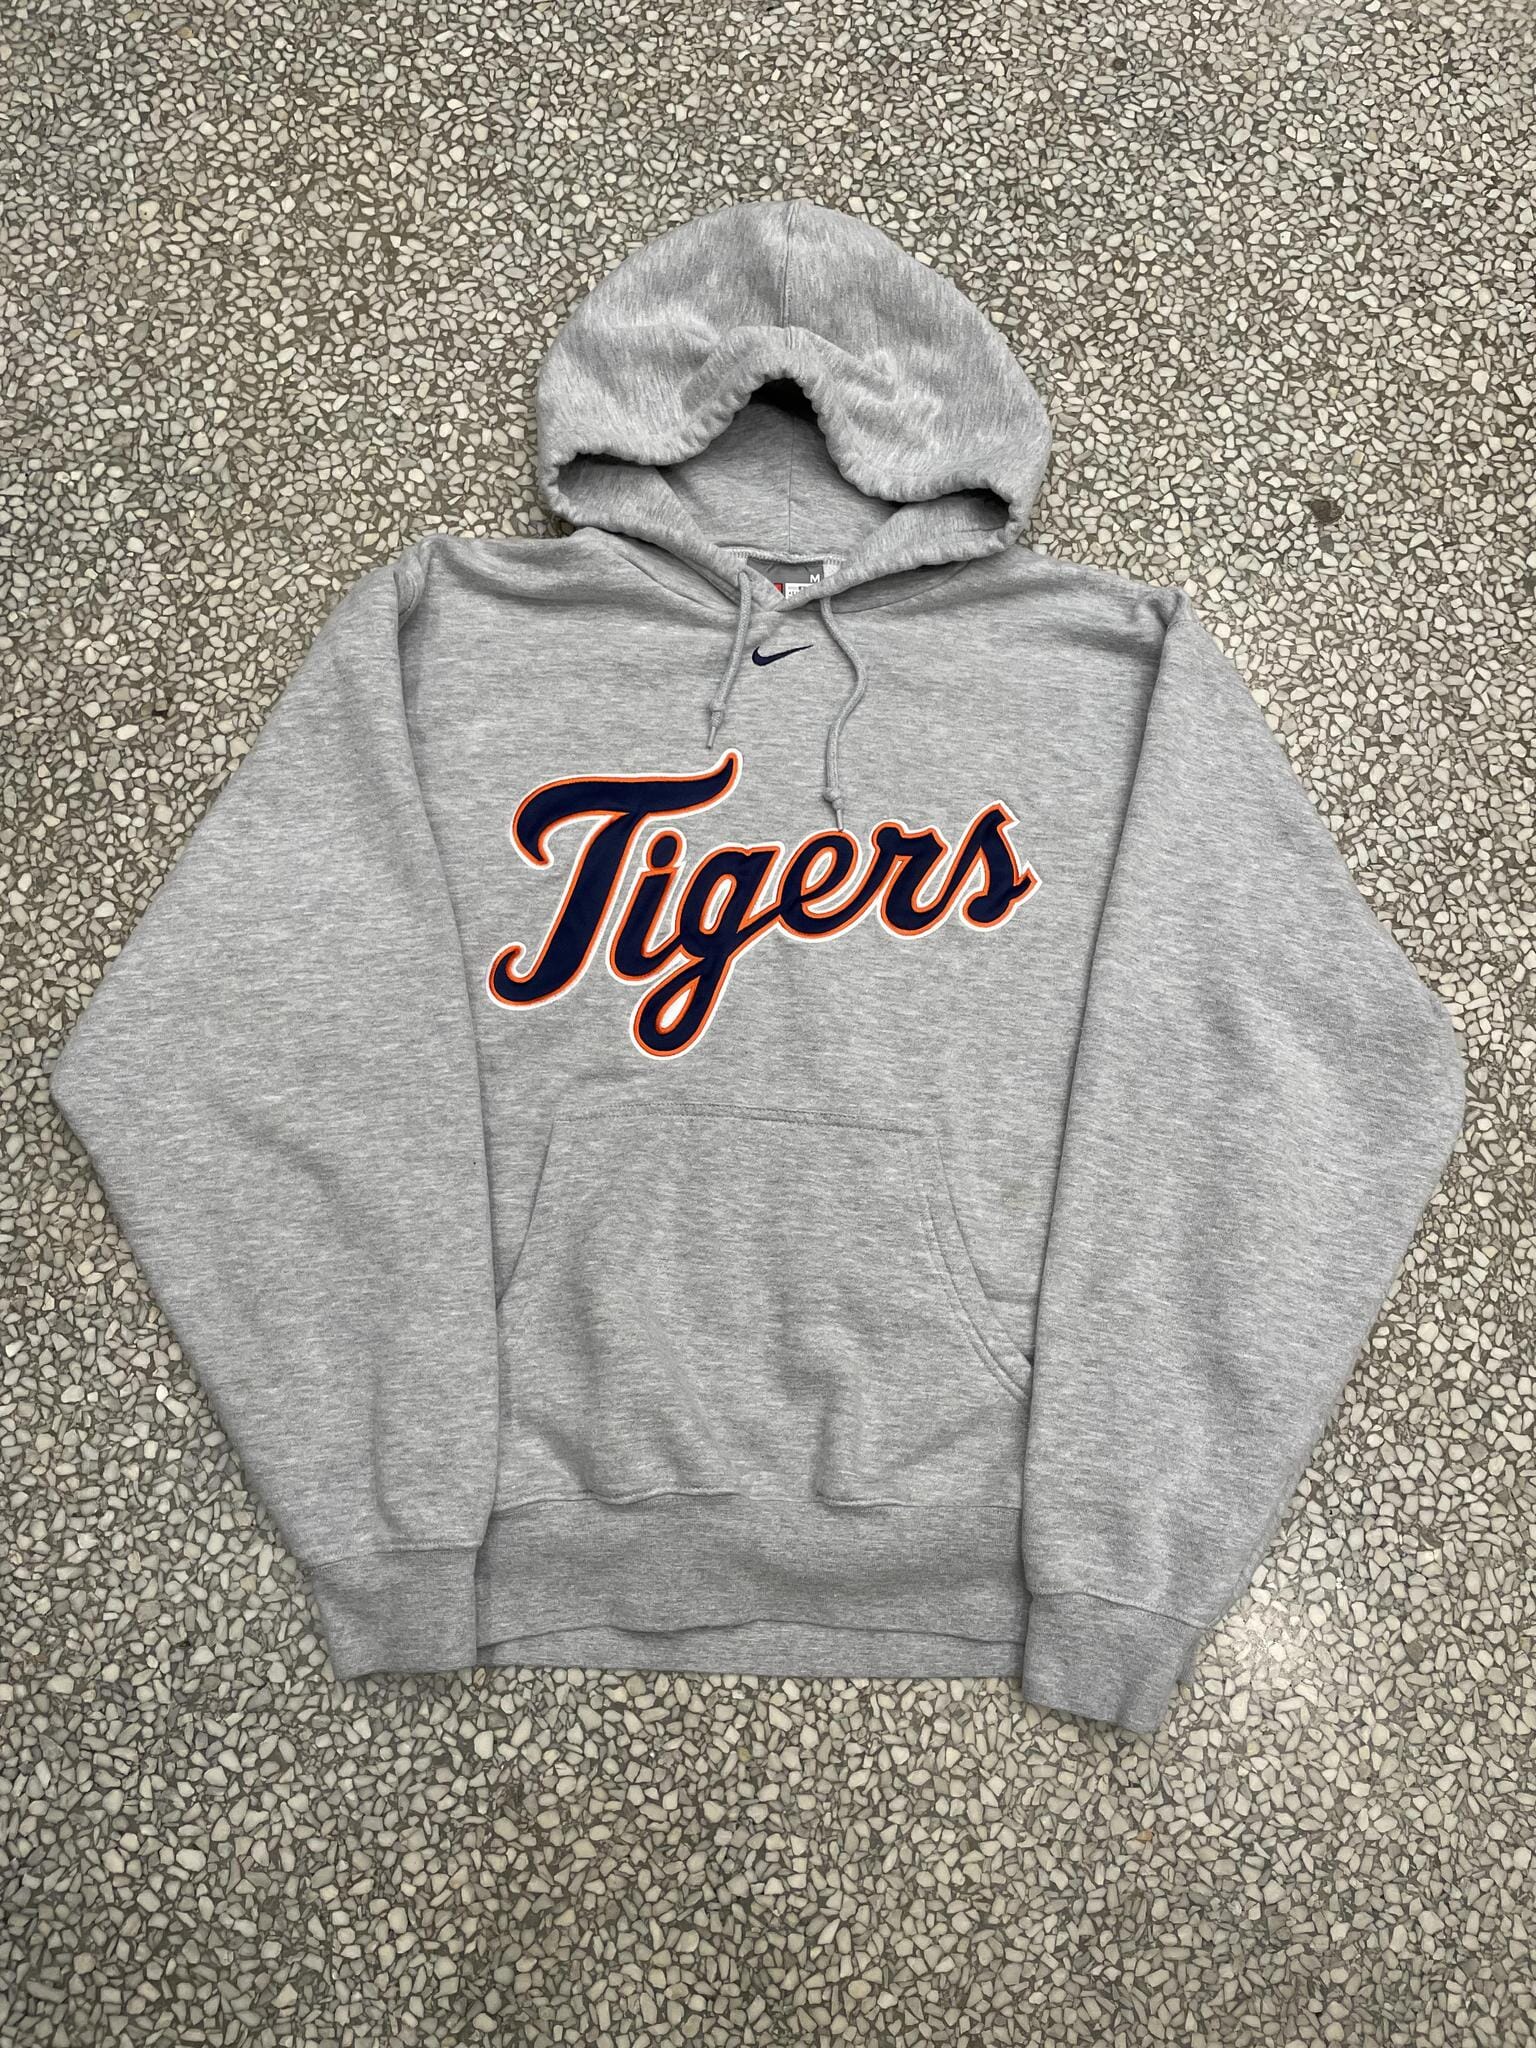 Vintage Detroit Tigers Hoodie / Nike / MLB / Baseball / 